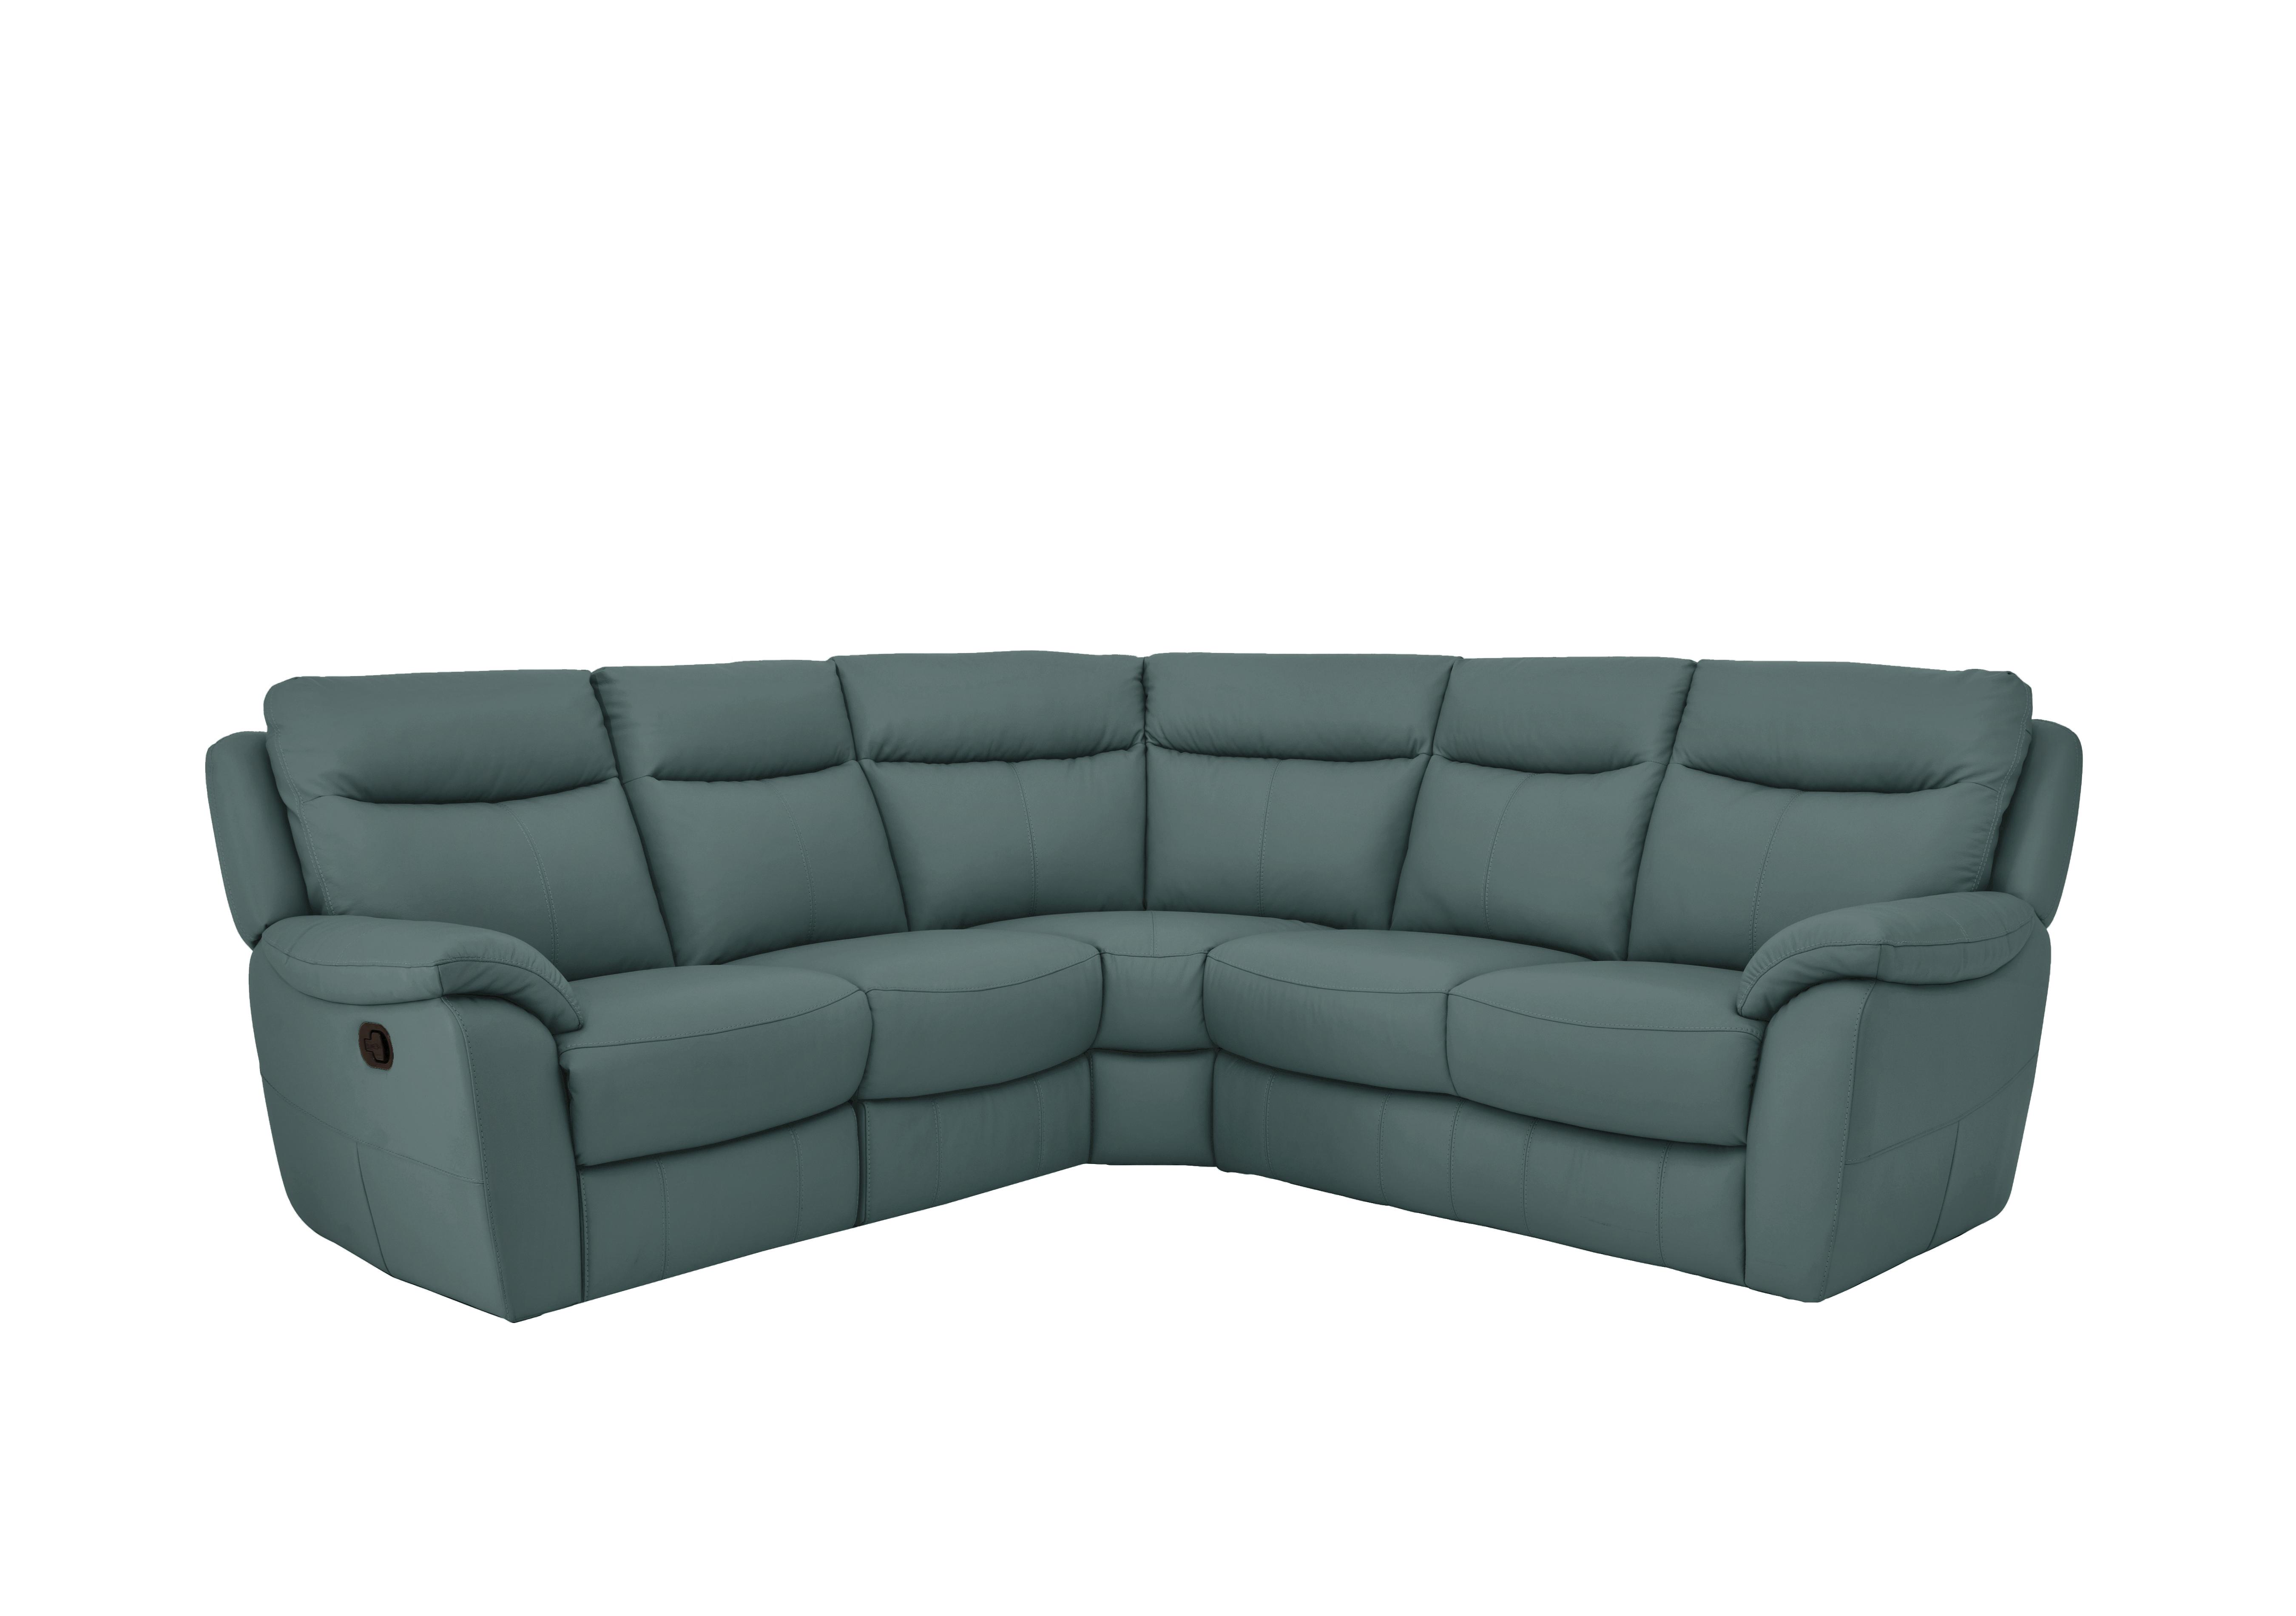 Snug Leather Corner Sofa in Bv-301e Lake Green on Furniture Village